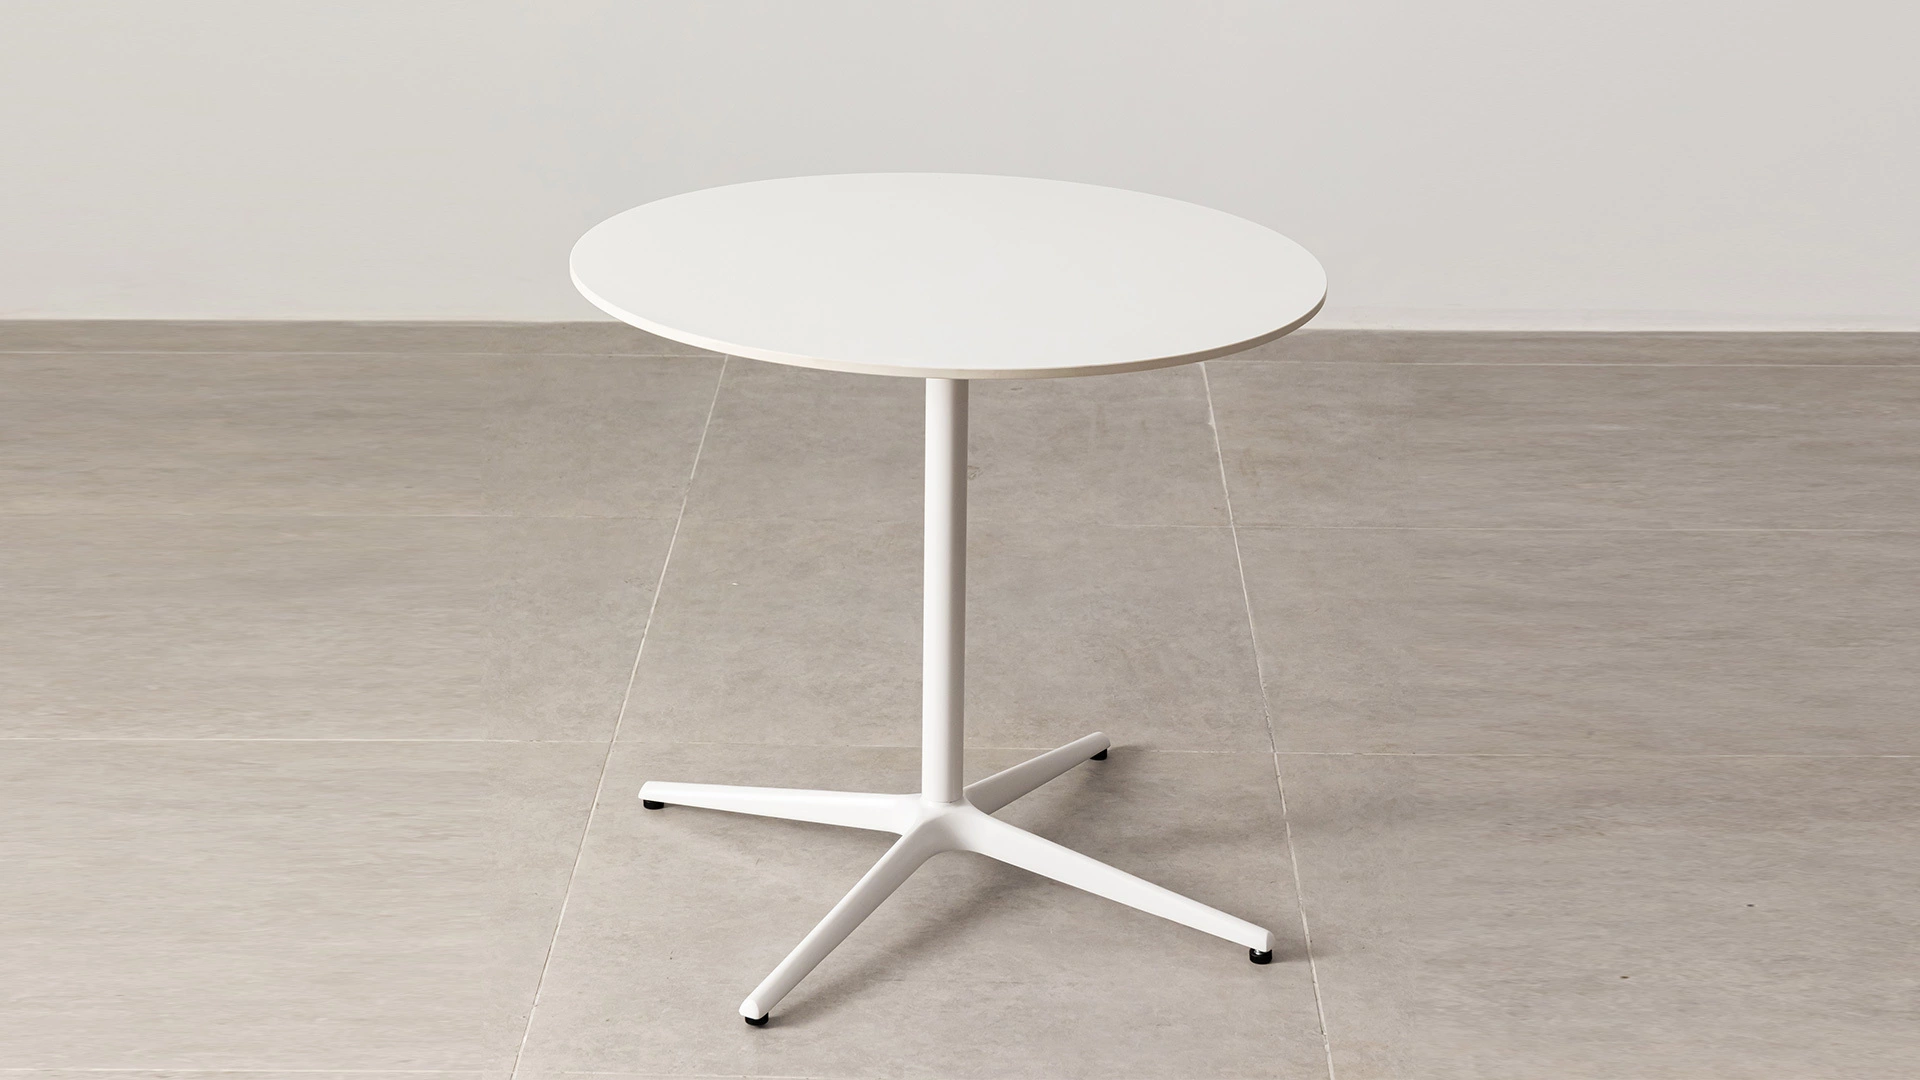 Innovation Yika -S Simple Design Living yara Table Pẹlu seramiki Table Top BK Ciandre 5